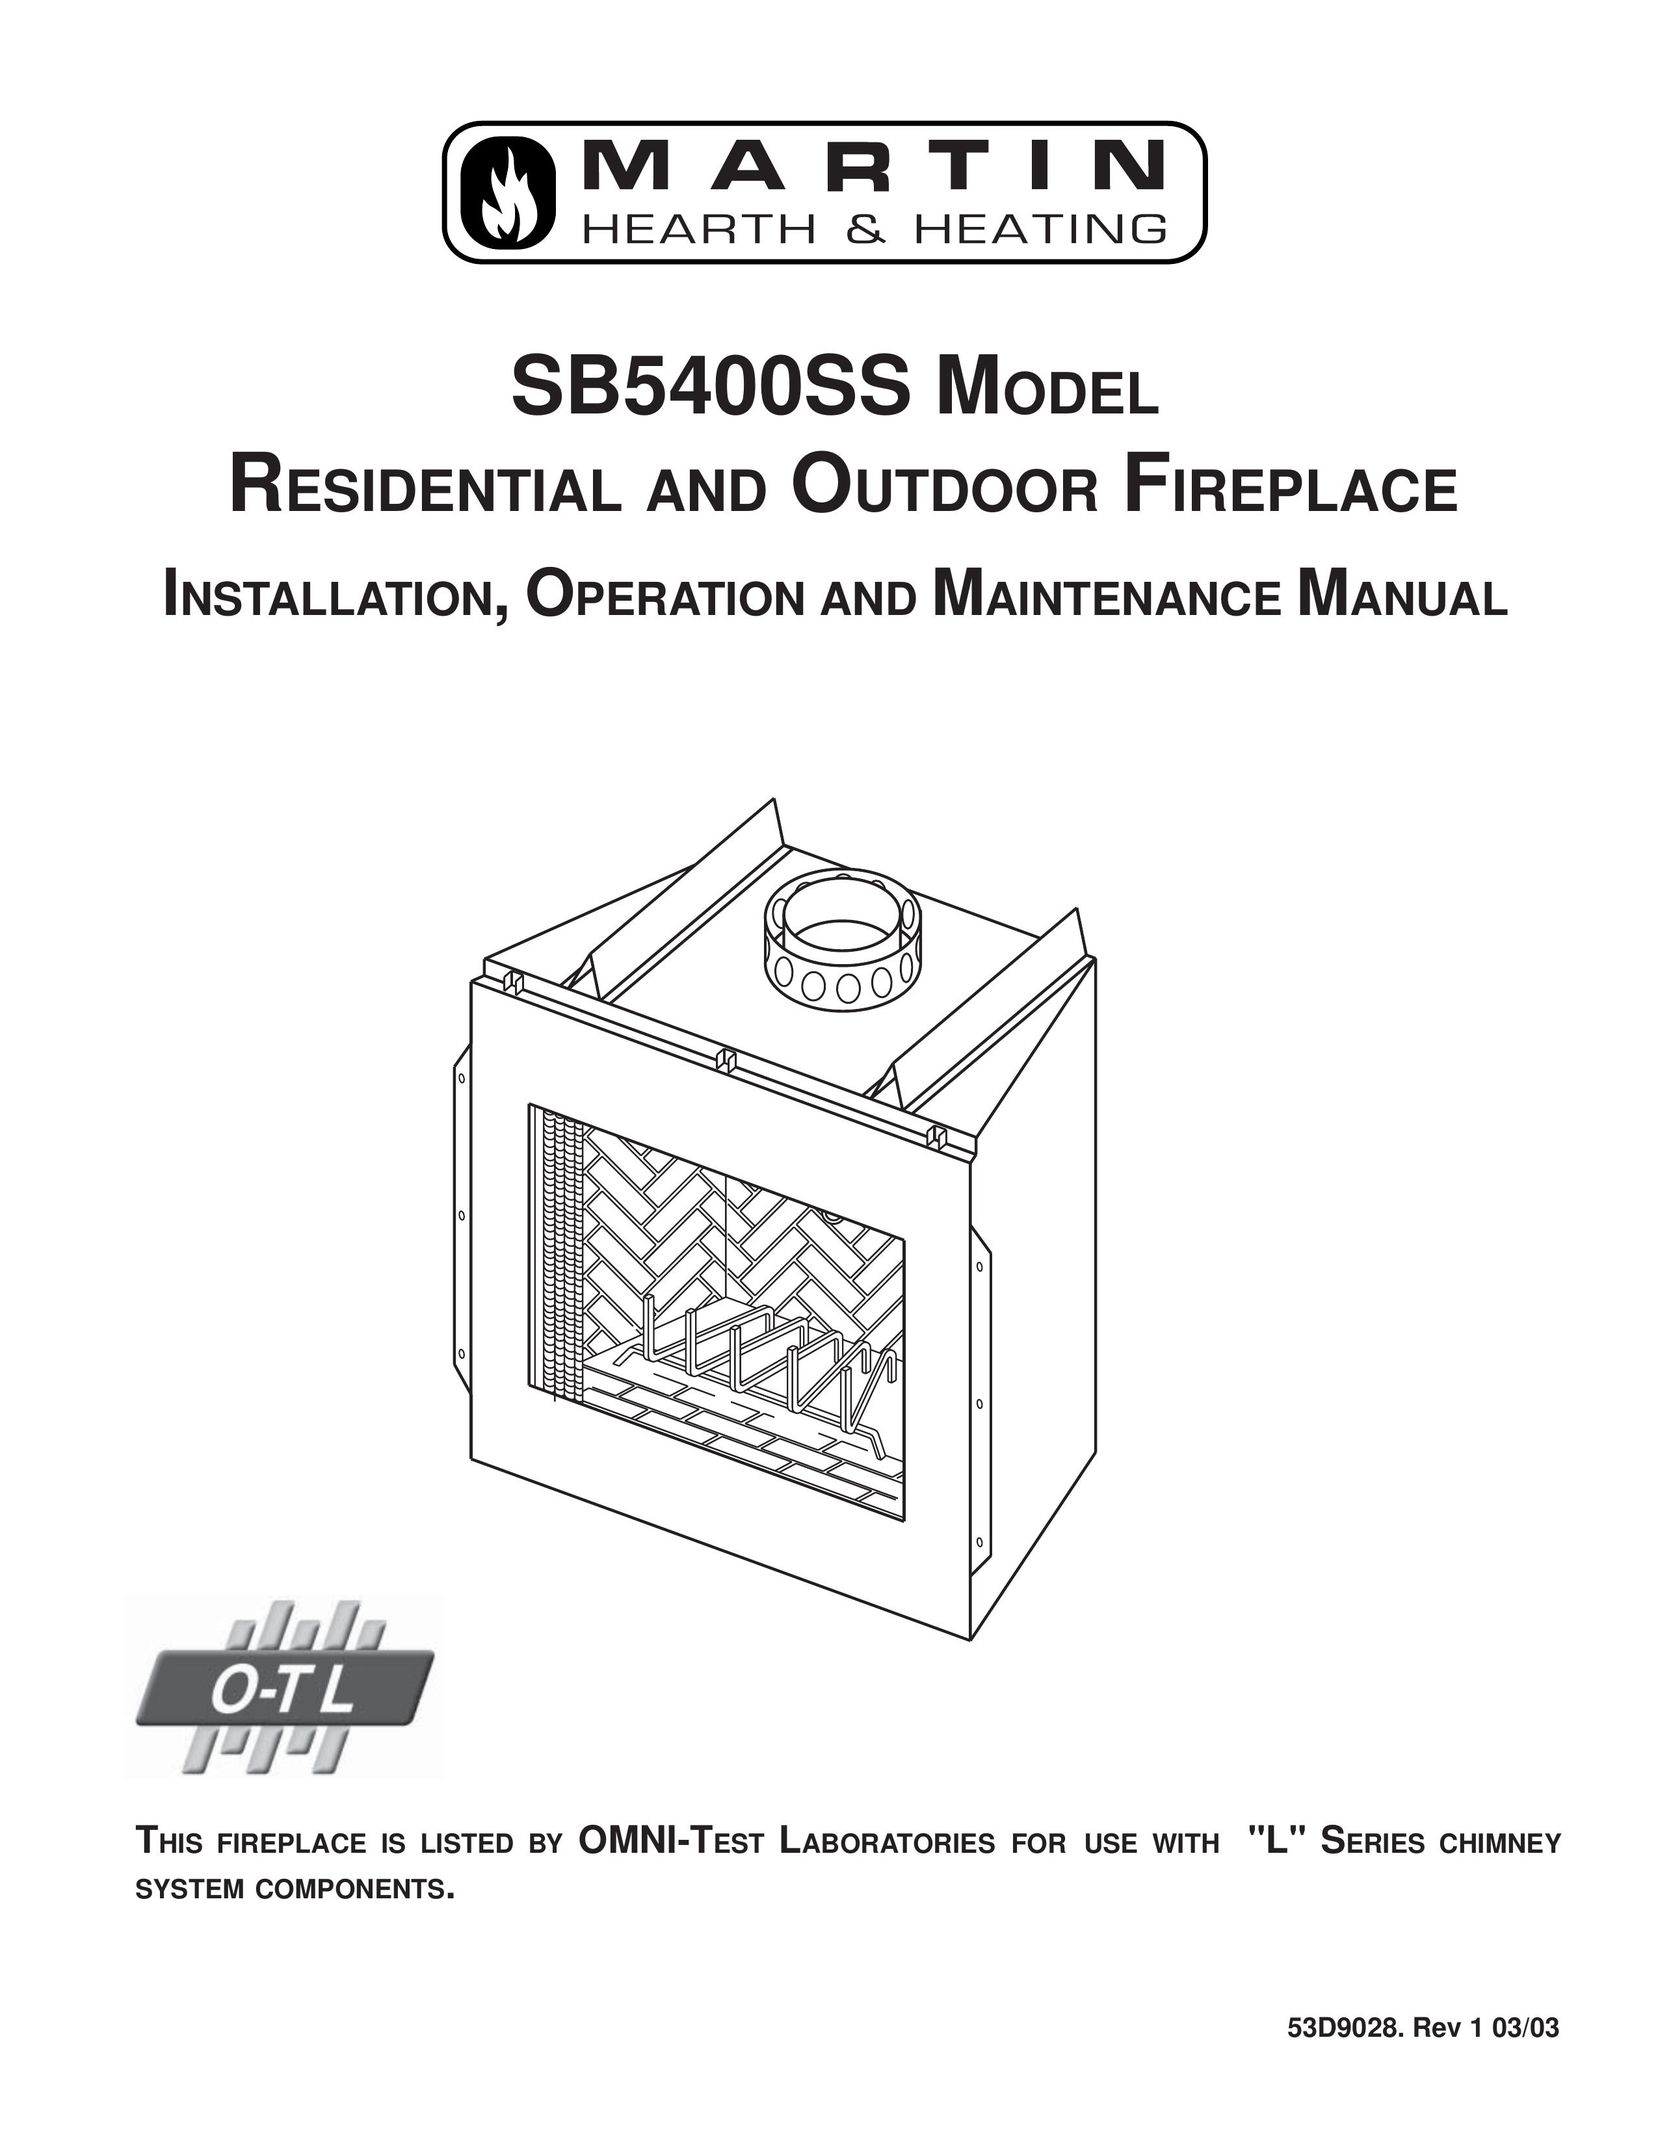 Martin Fireplaces SB5400SS Indoor Fireplace User Manual